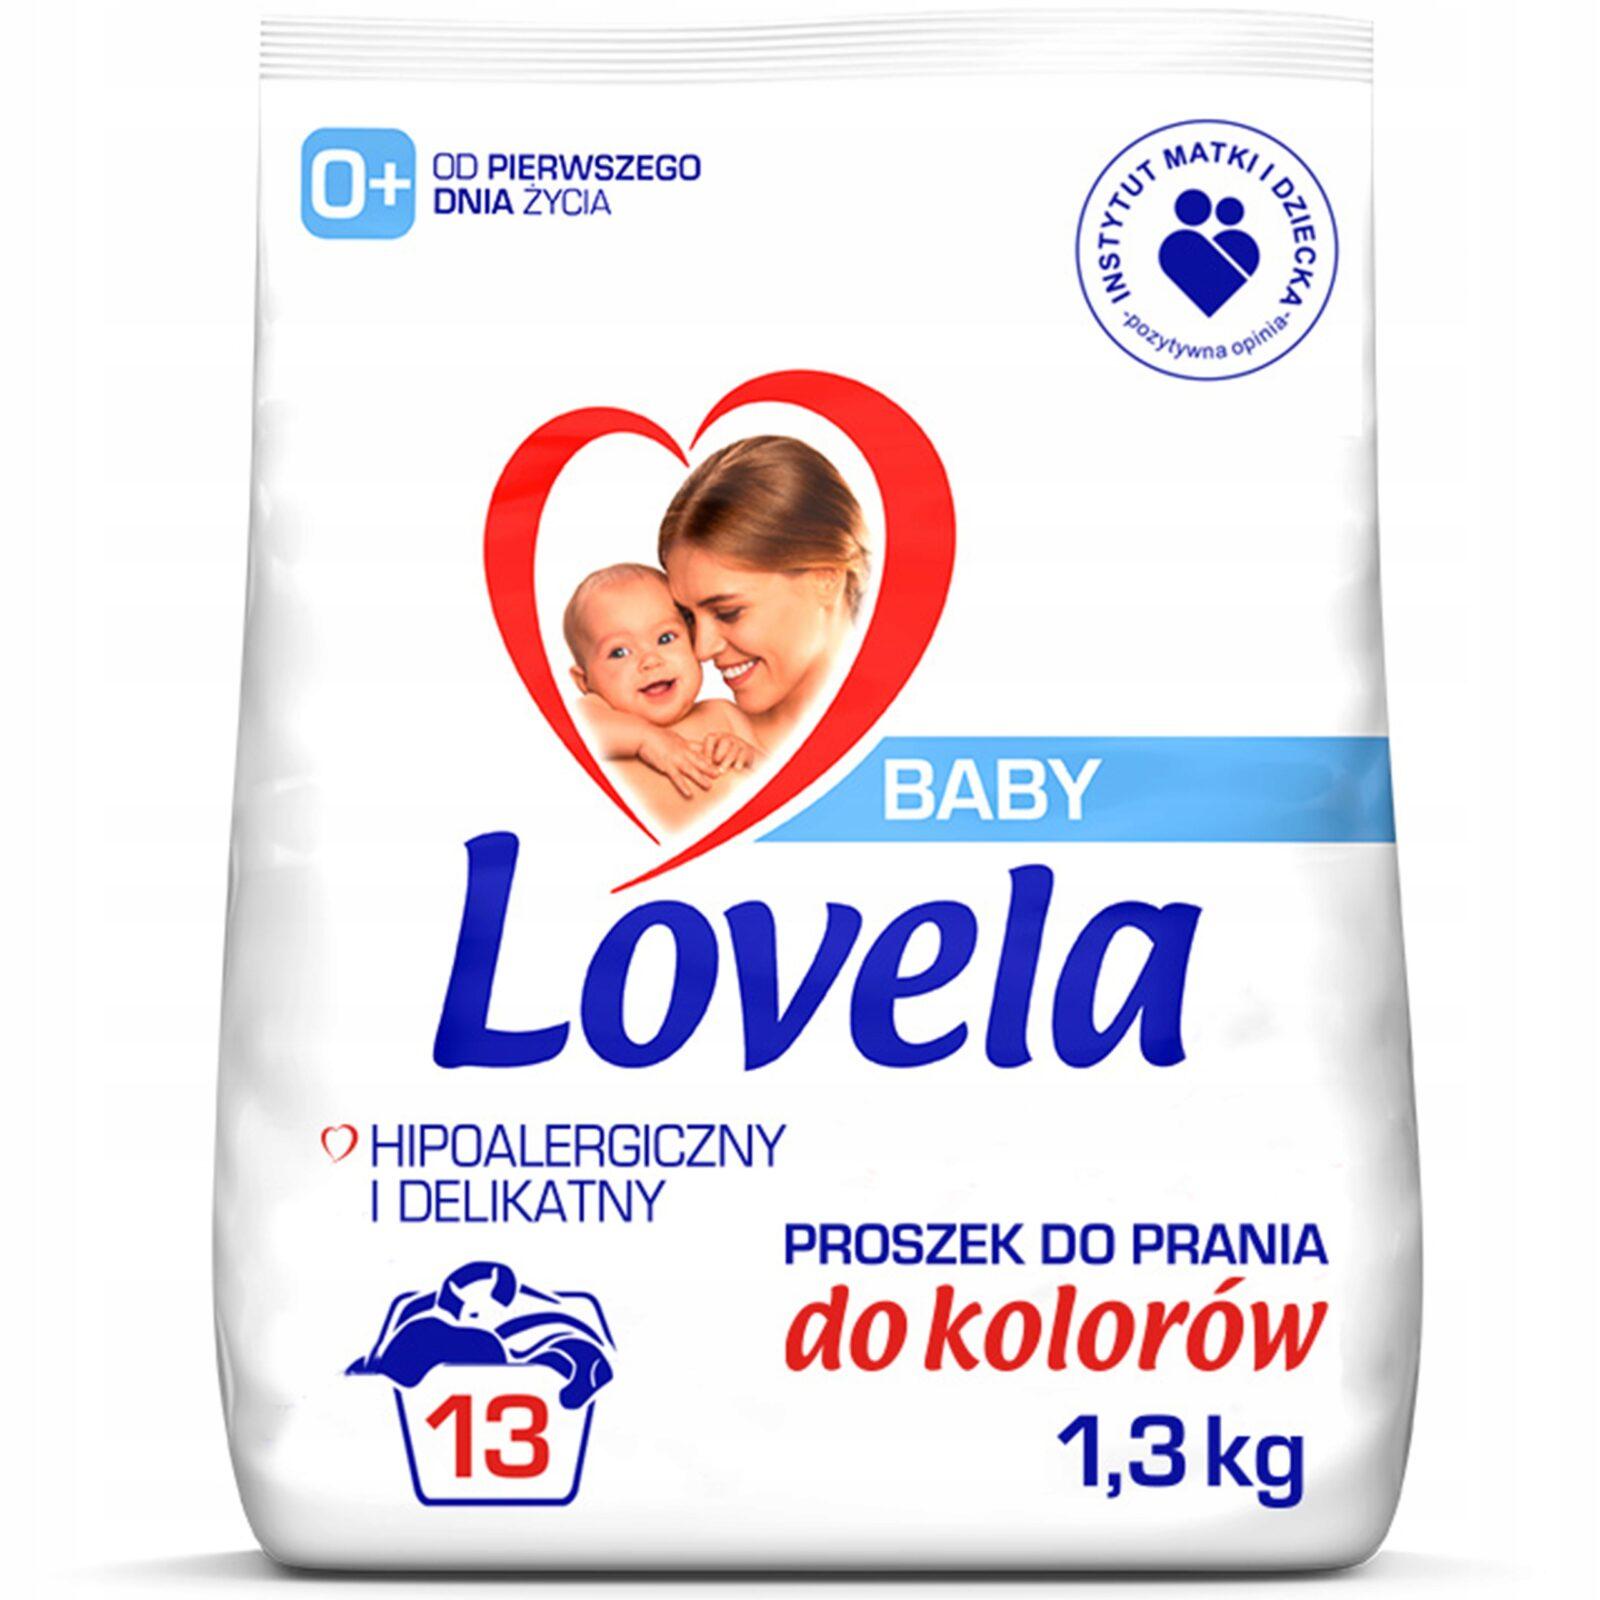 Lovela-Proszek-hipoalergiczny-do-koloru-1-3kg.jpg